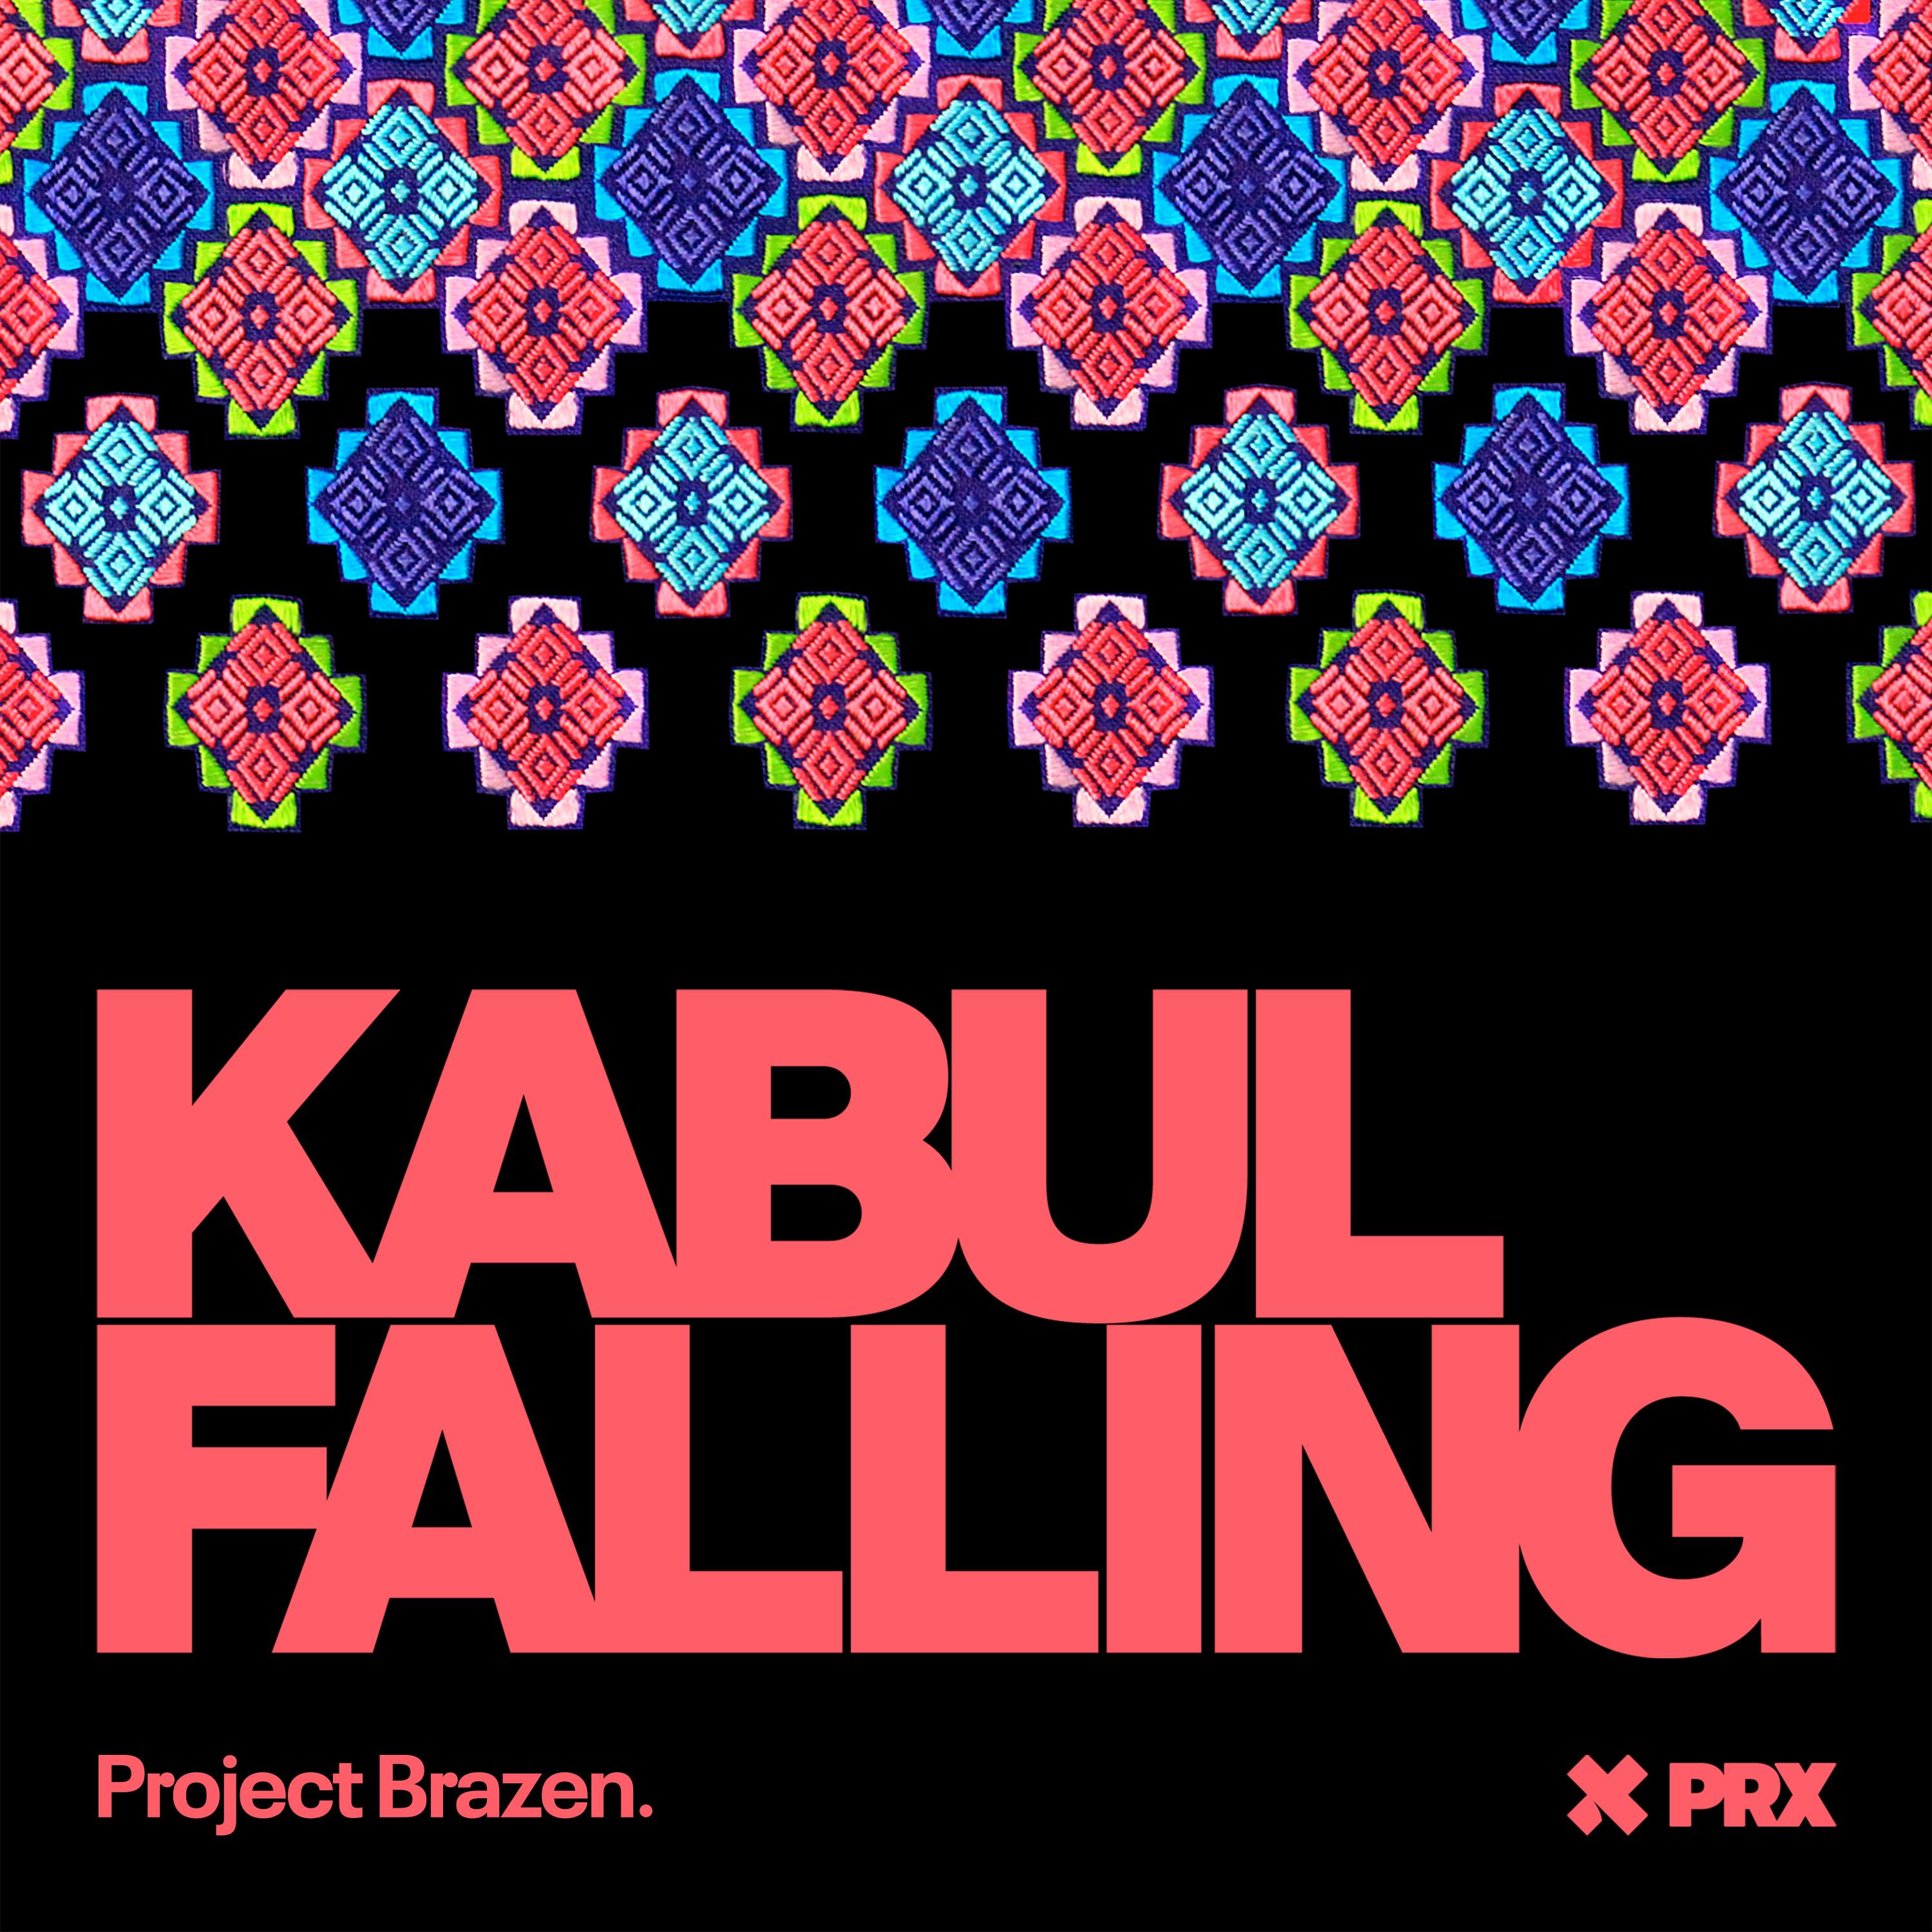 Thumbnail for "Introducing Kabul Falling, Coming Soon".